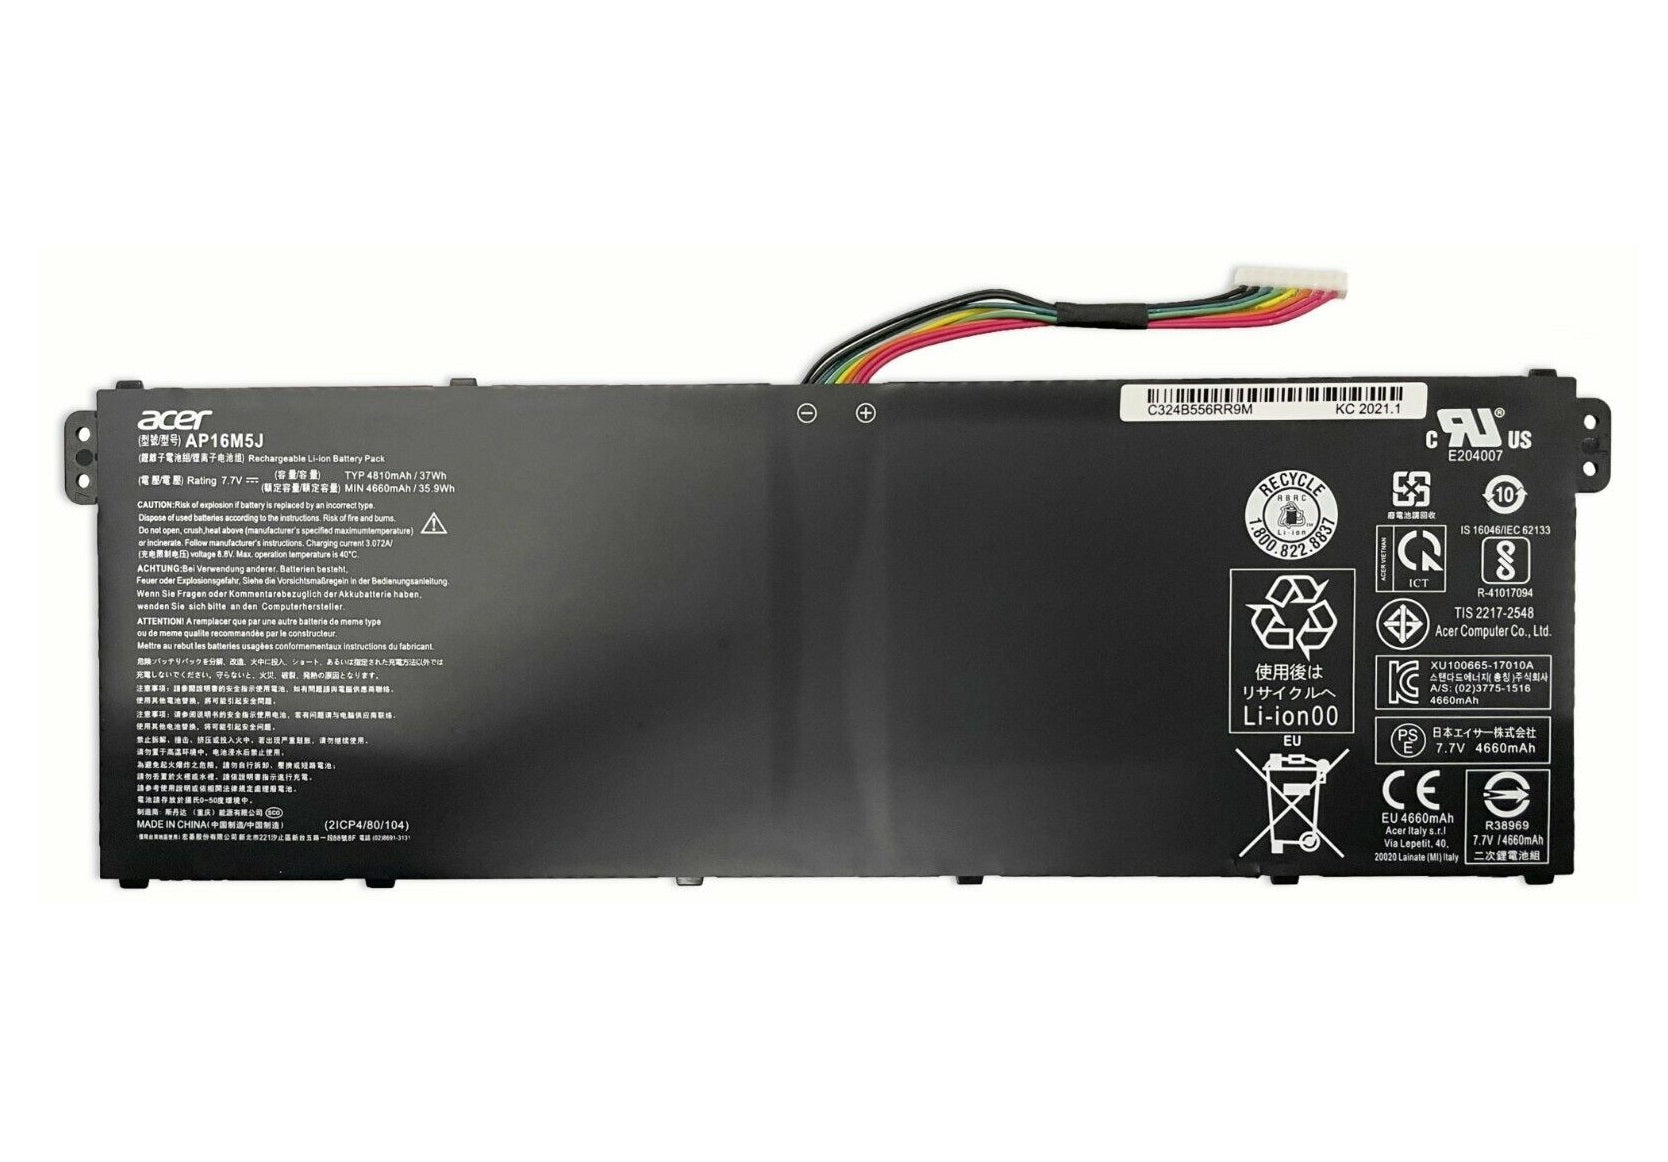 Acer AP16M5J Battery Aspire A315-32 A315-33 A315-41 A315-51 A315-53 2ICP4/80/104